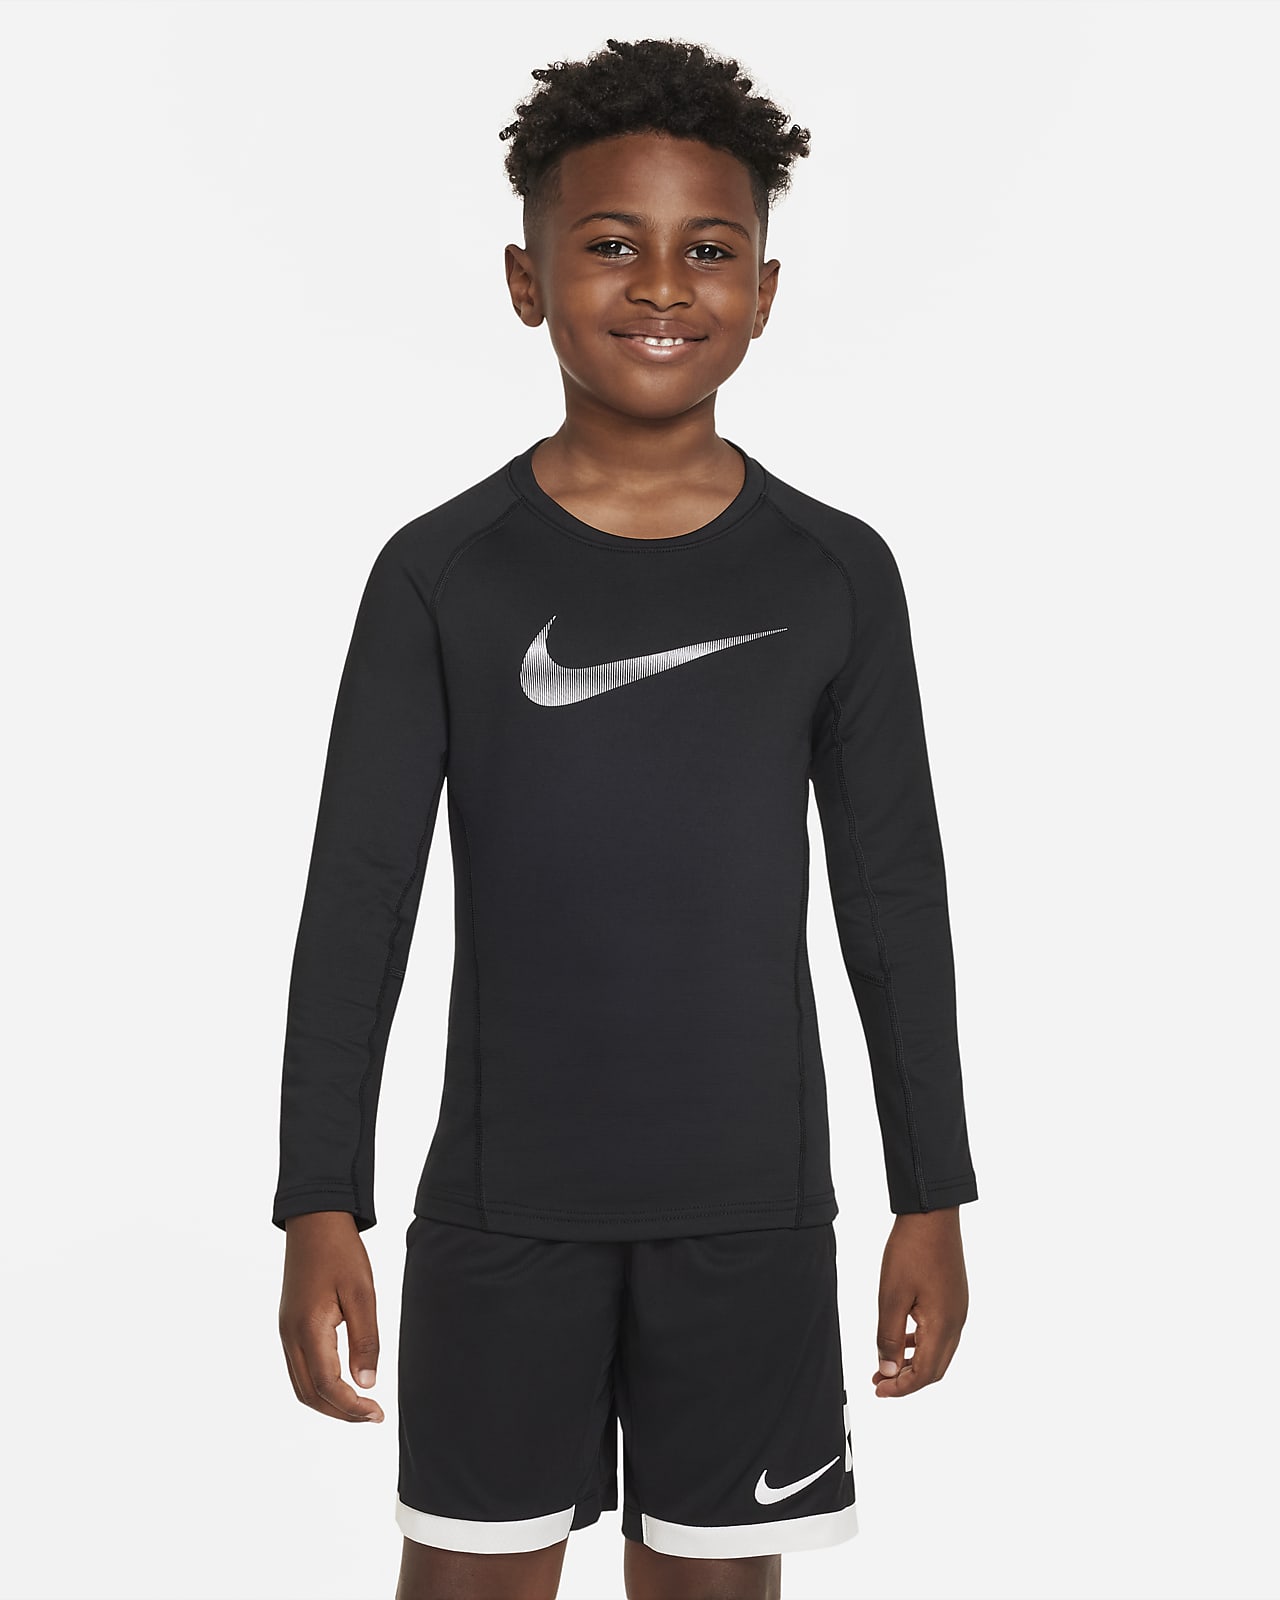 Witty compensate longitude Nike Pro Warm Big Kids' (Boys') Long-Sleeve Top. Nike.com